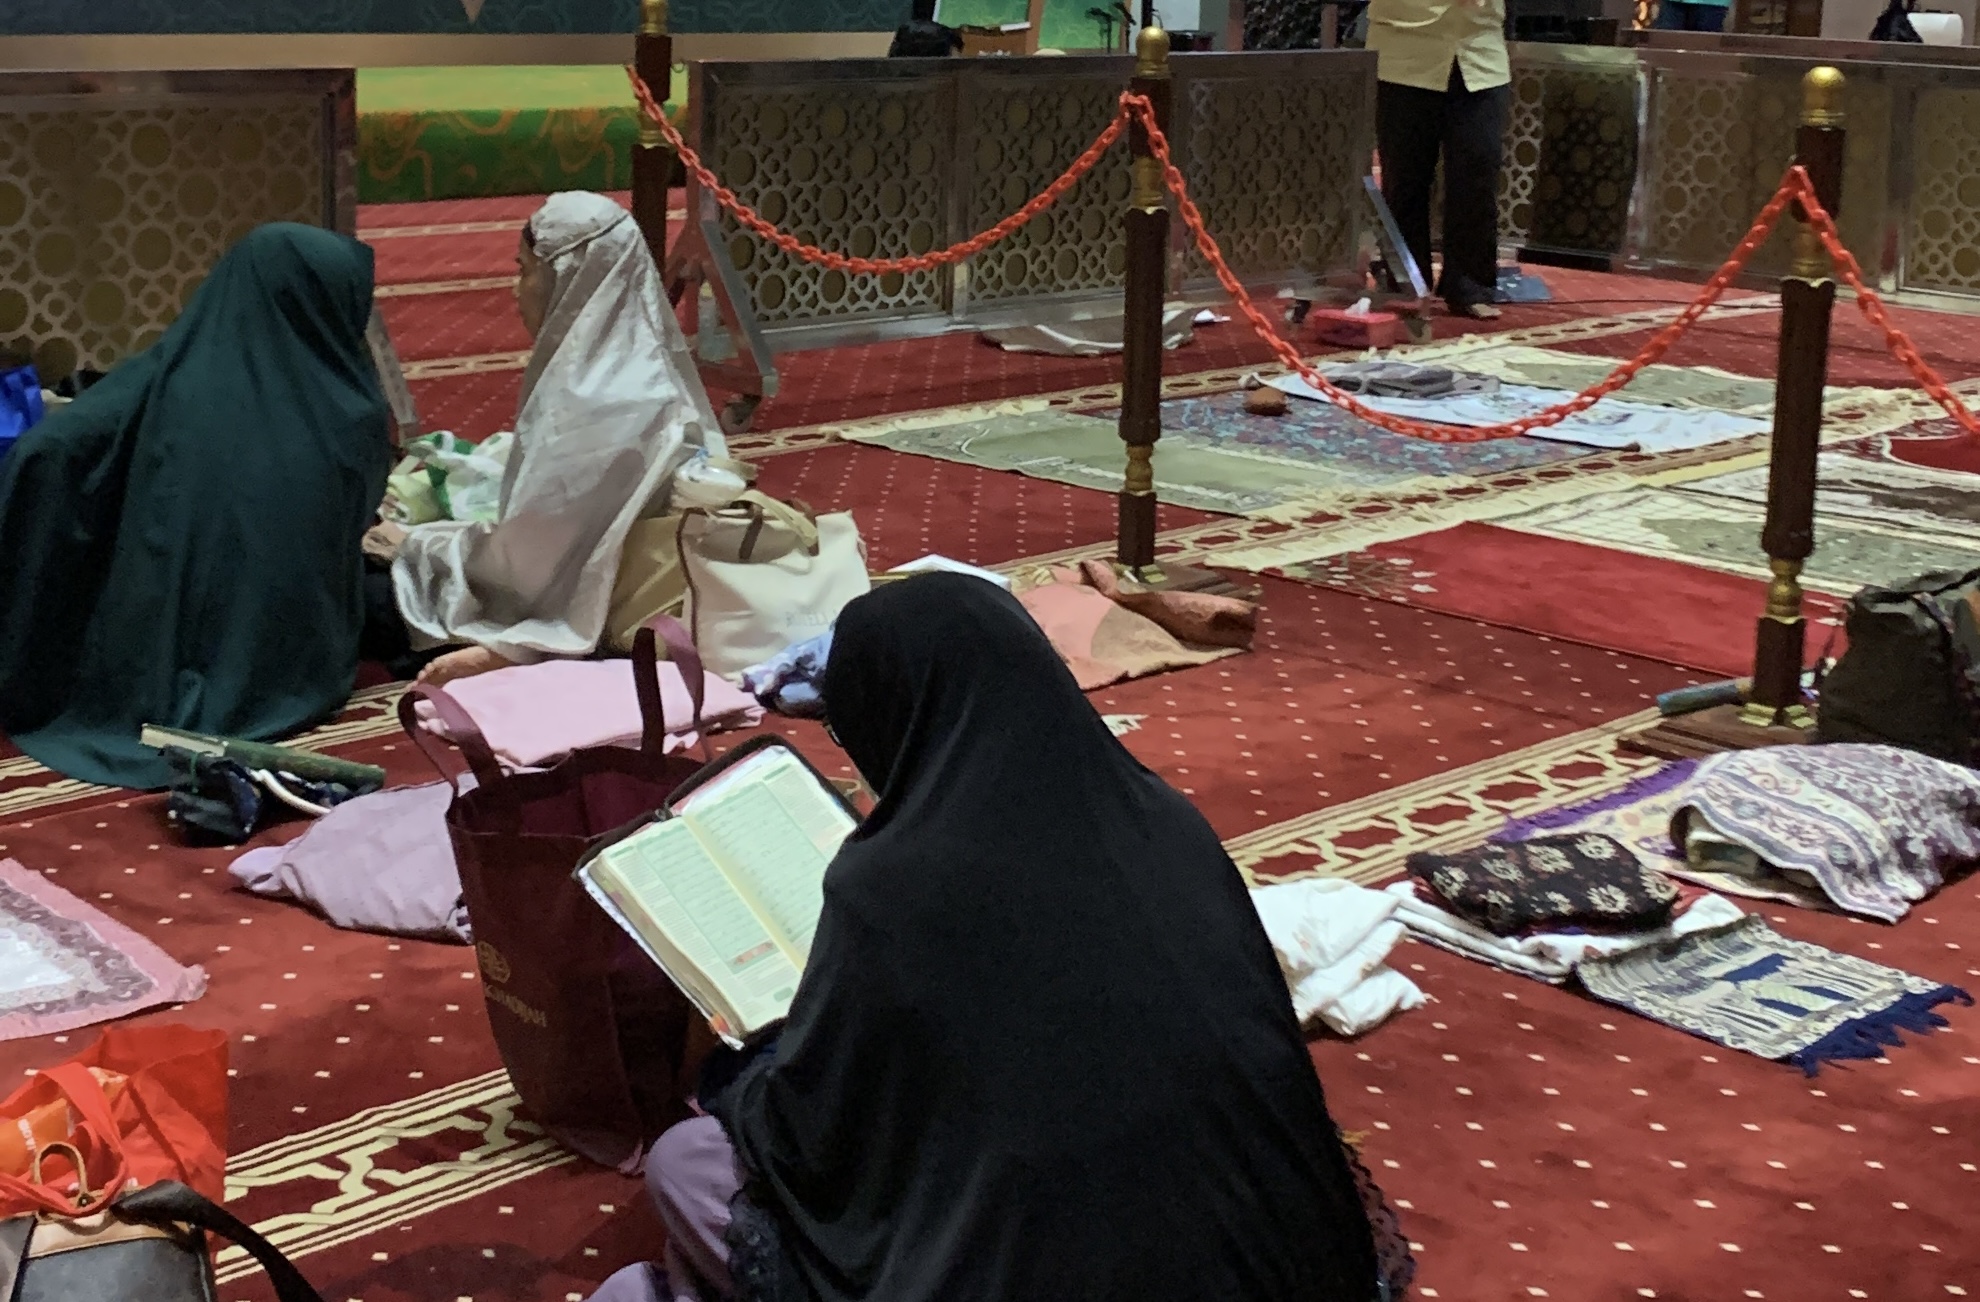 Informasi Penyelenggaraan Iktikaf dan Qiyamullail di Masjid Istiqlal, Ada Pedoman Hingga Jadwal Imam Qiyamullail